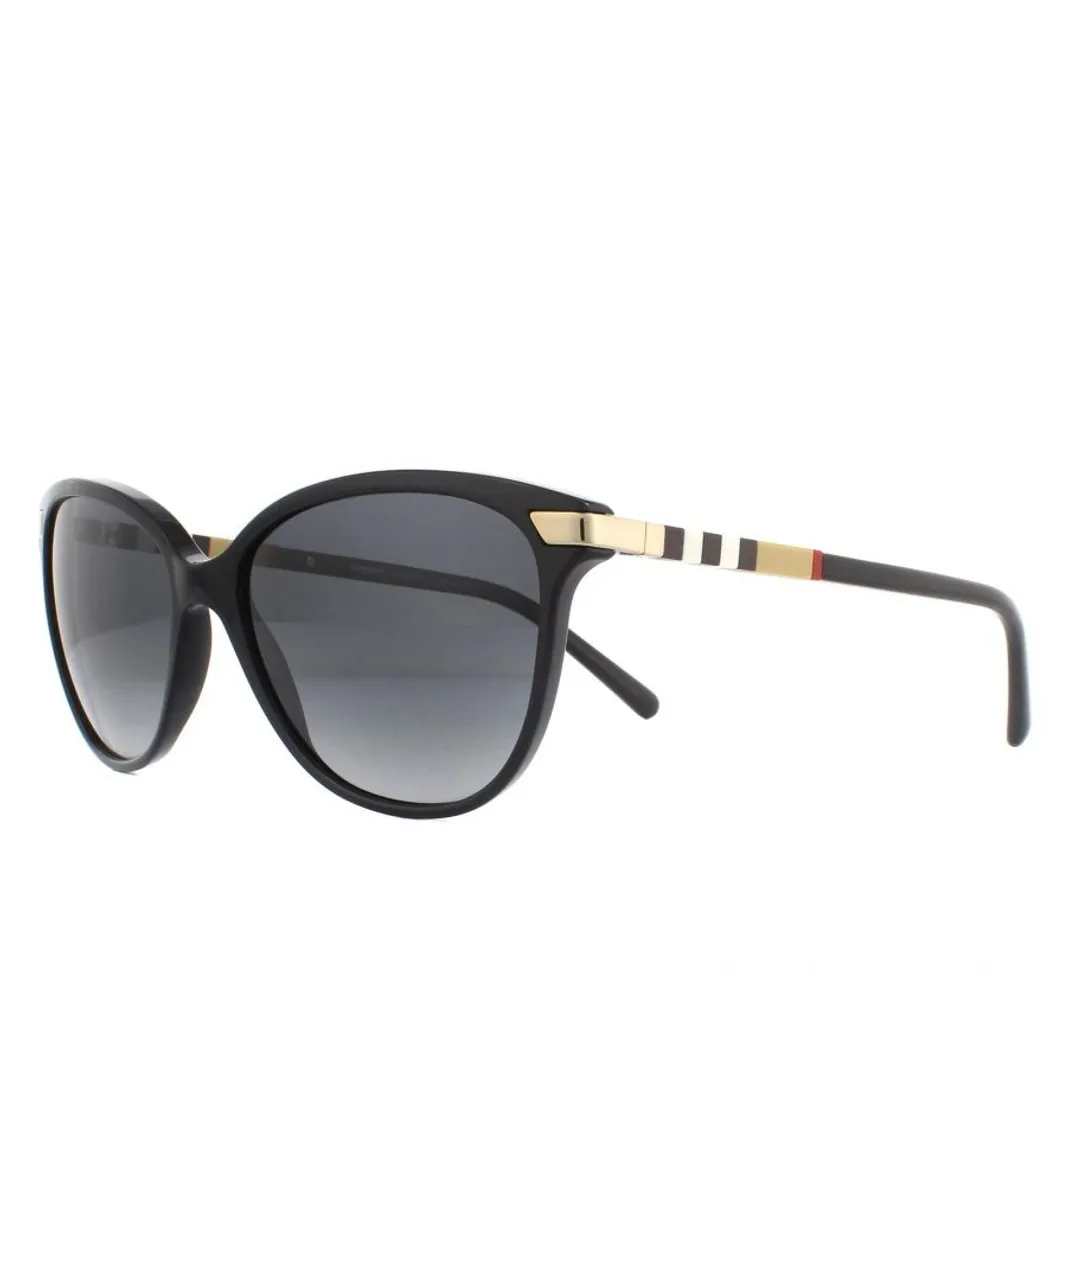 Burberry Womens Sunglasses BE4216 3001T3 Black Grey Gradient Polarized - One